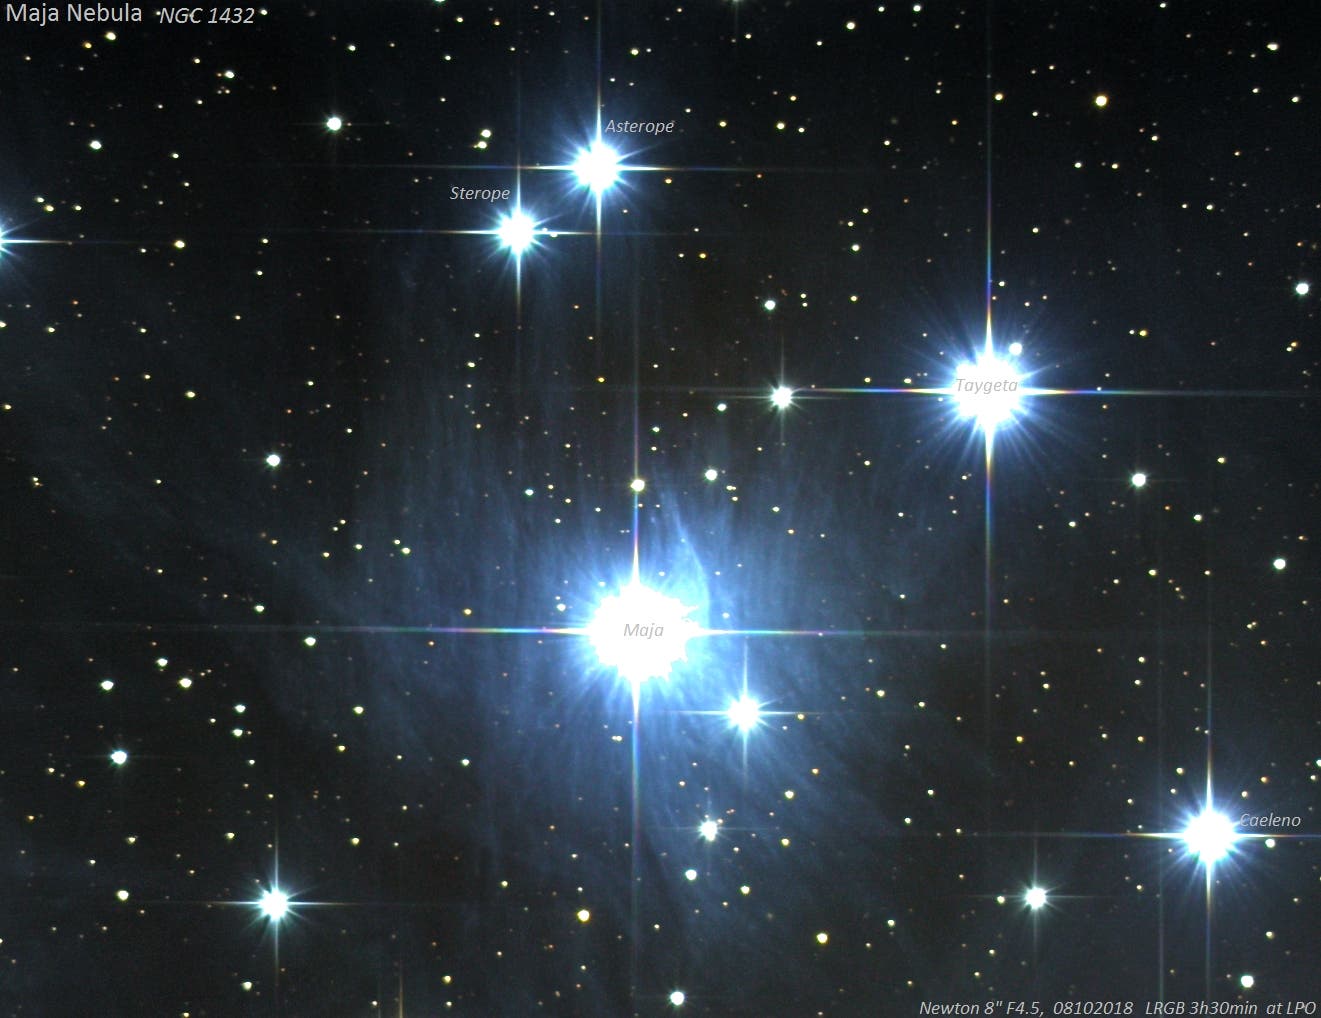 Maja-Nebel in M45, NGC 1432